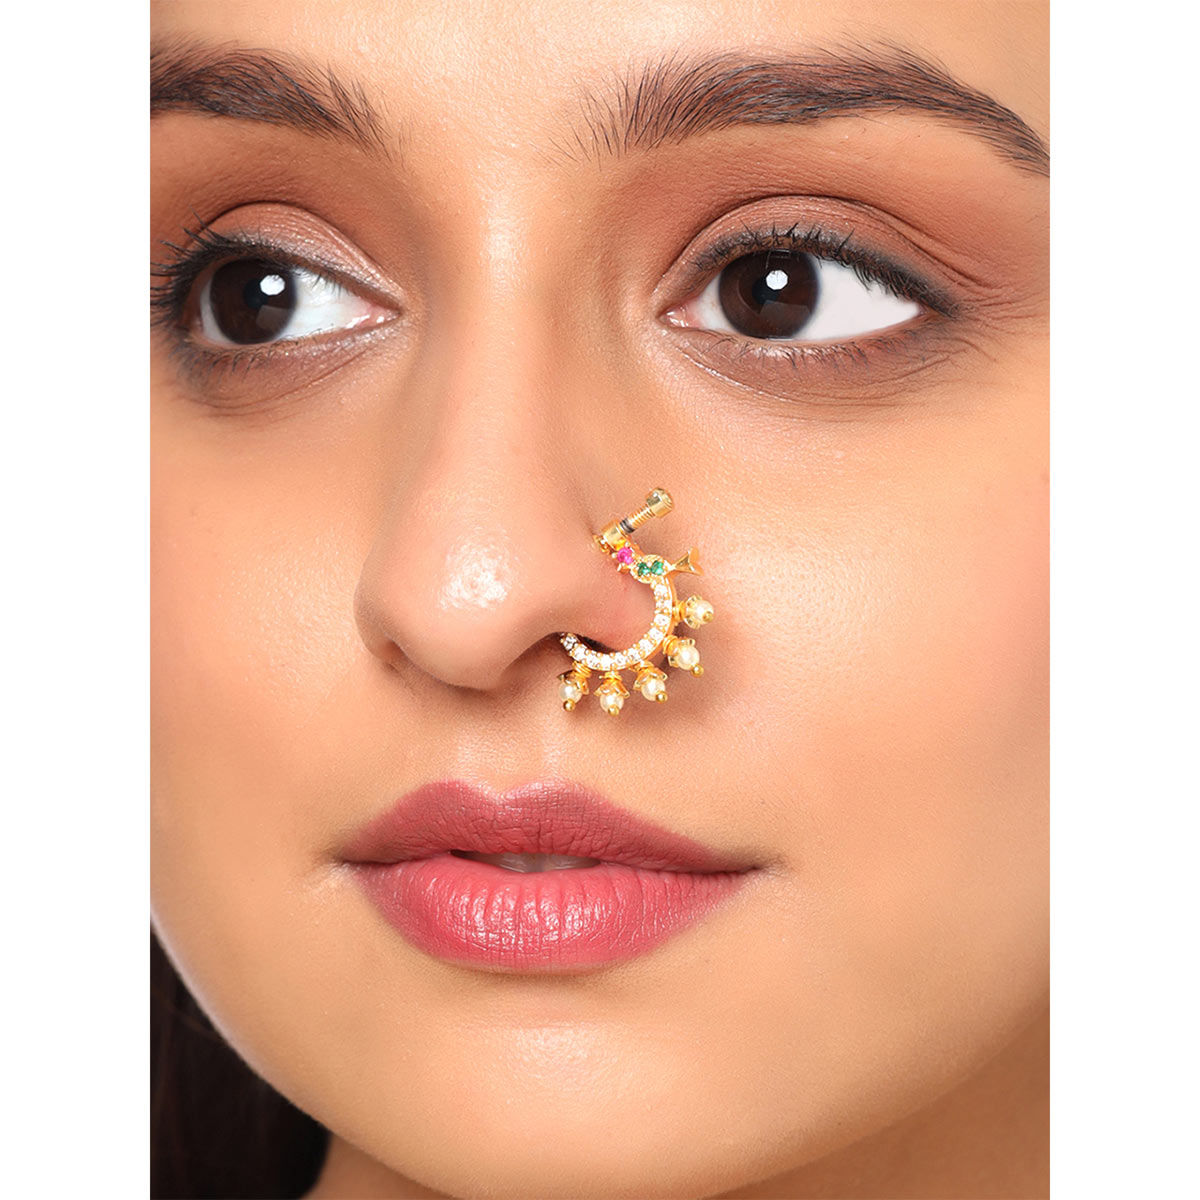 Buy JFORYOU Fake Nose Rings Stainless Steel Inlaid CZ Faux Piercing Jewelry  Fake Nose Ring Spring Clip on Circle Hoop No Pierced Septum Nose Ring Women  Men, Metal at Amazon.in